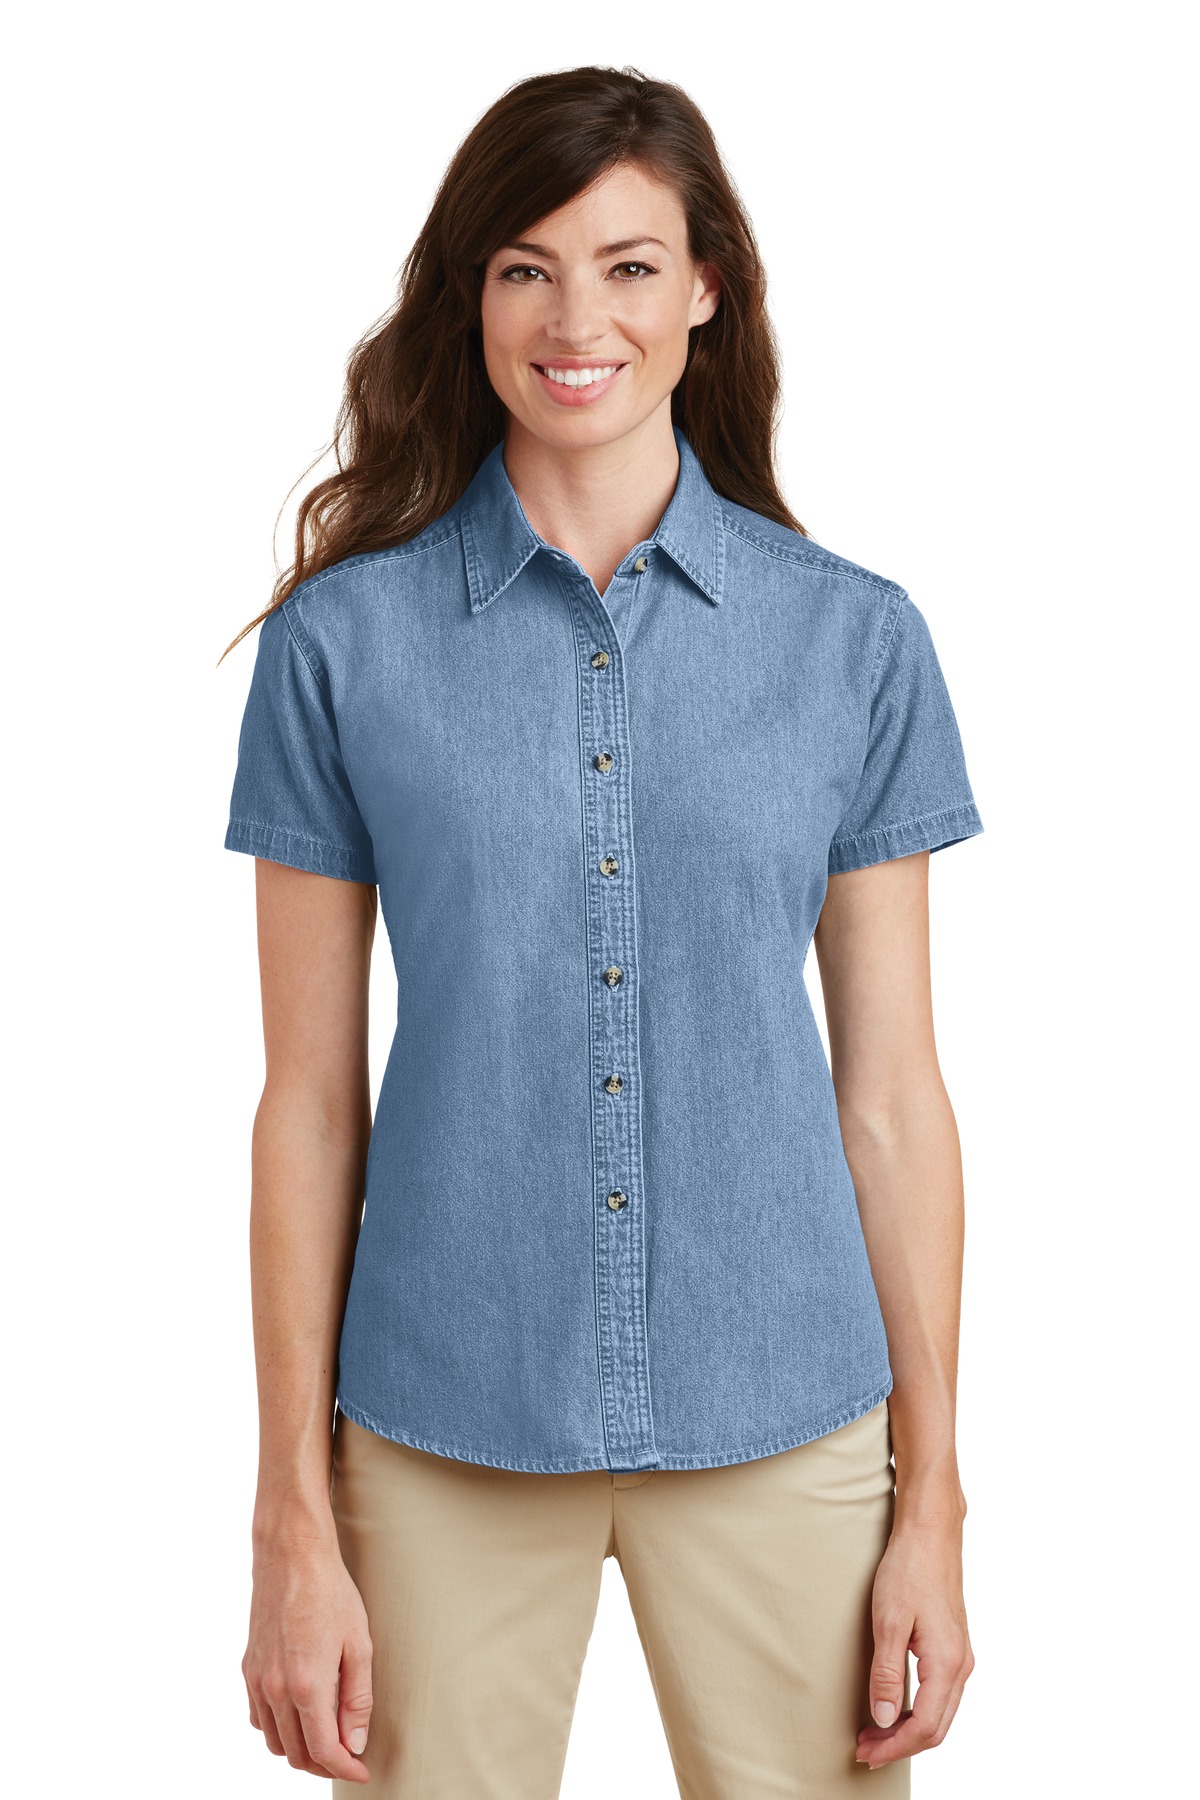 Port & Company Short Sleeve Value Denim Shirt (LSP11) Faded Blue, L - image 1 of 2